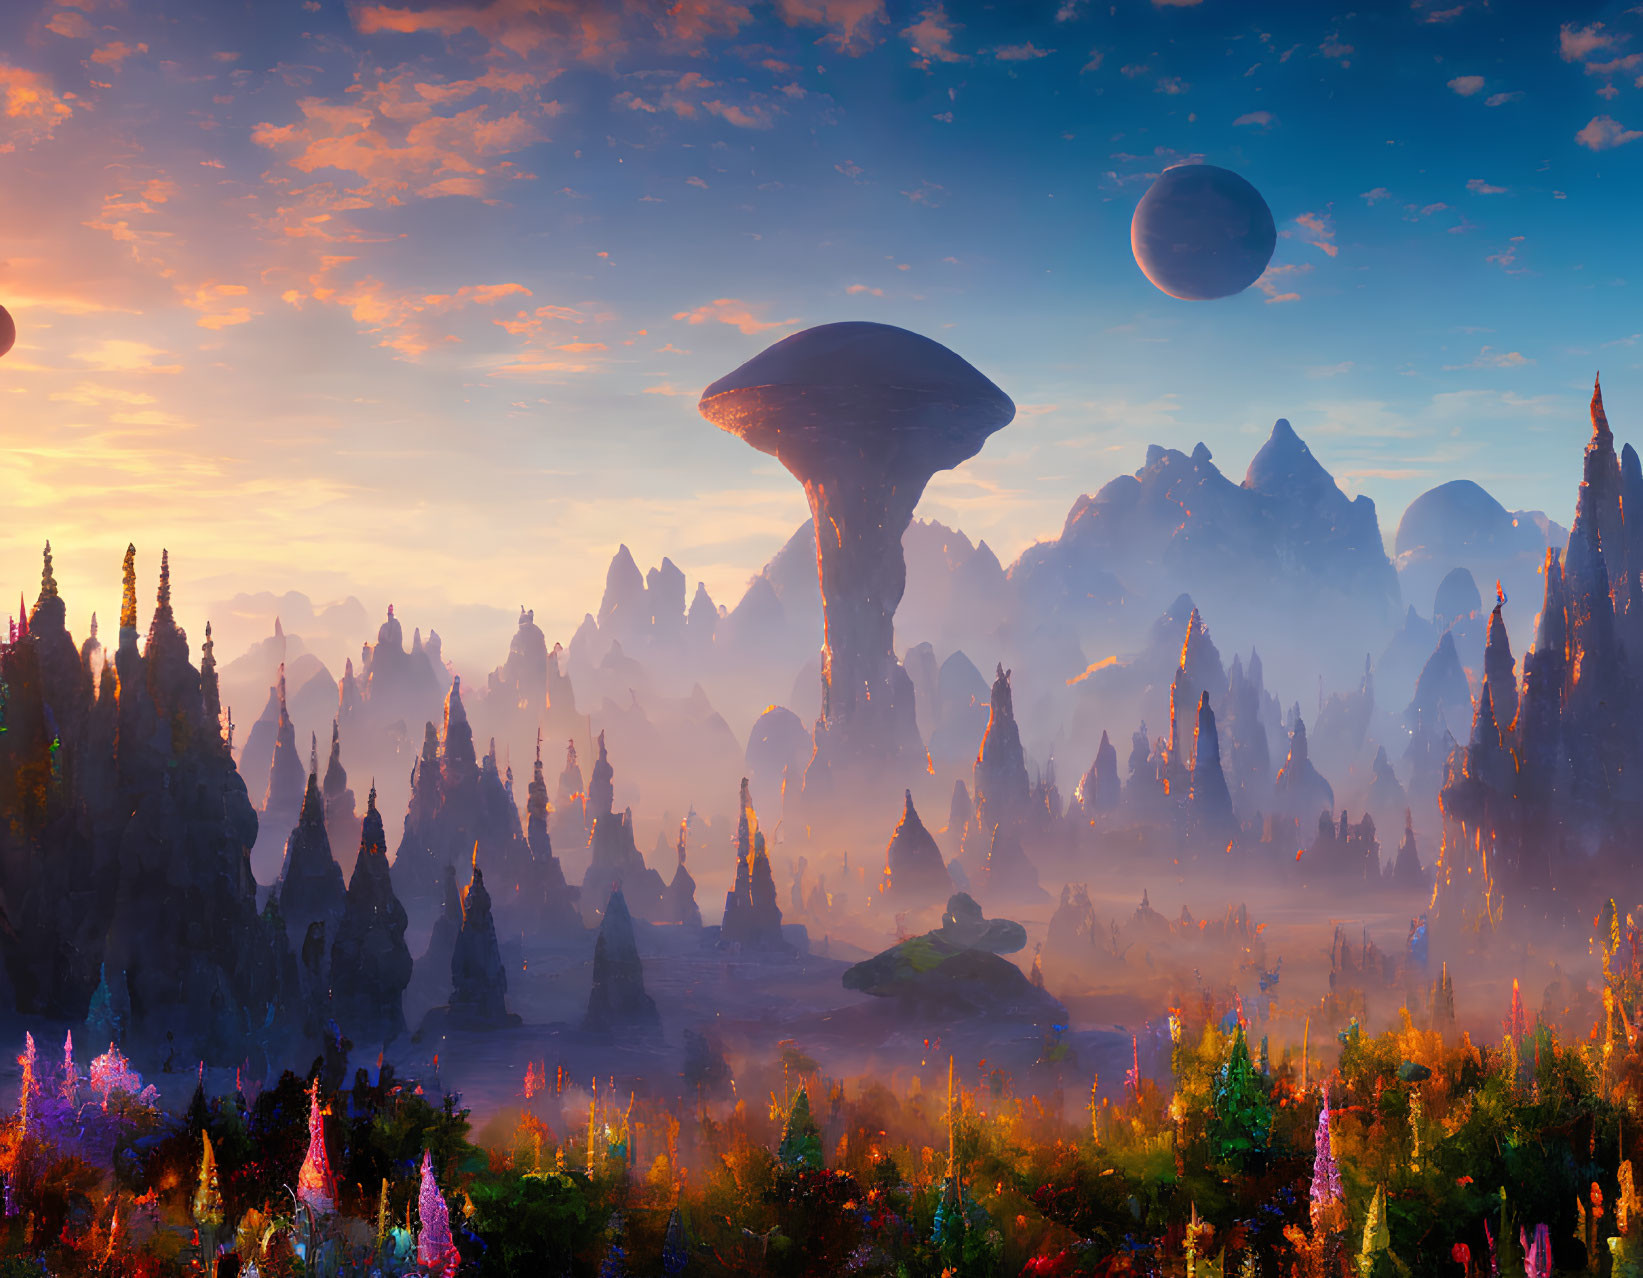 Colorful alien landscape: towering mushrooms, vibrant flora, misty atmosphere, large moon